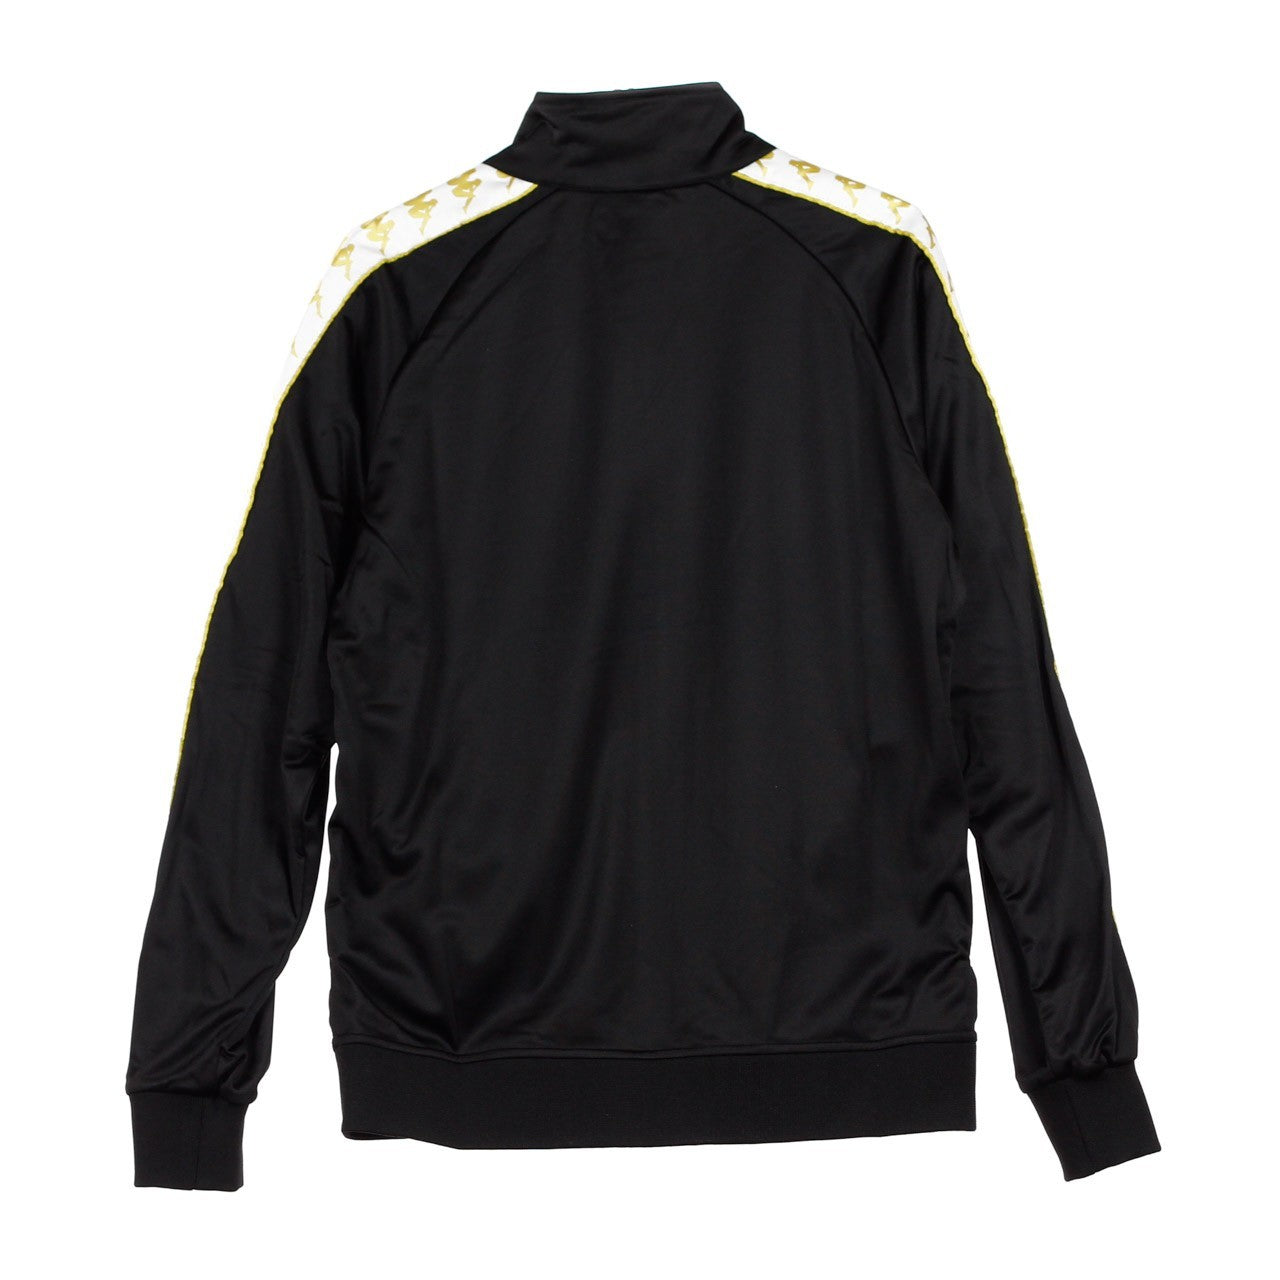 Anniston Slim Men's Track Jacket Black/white/gold